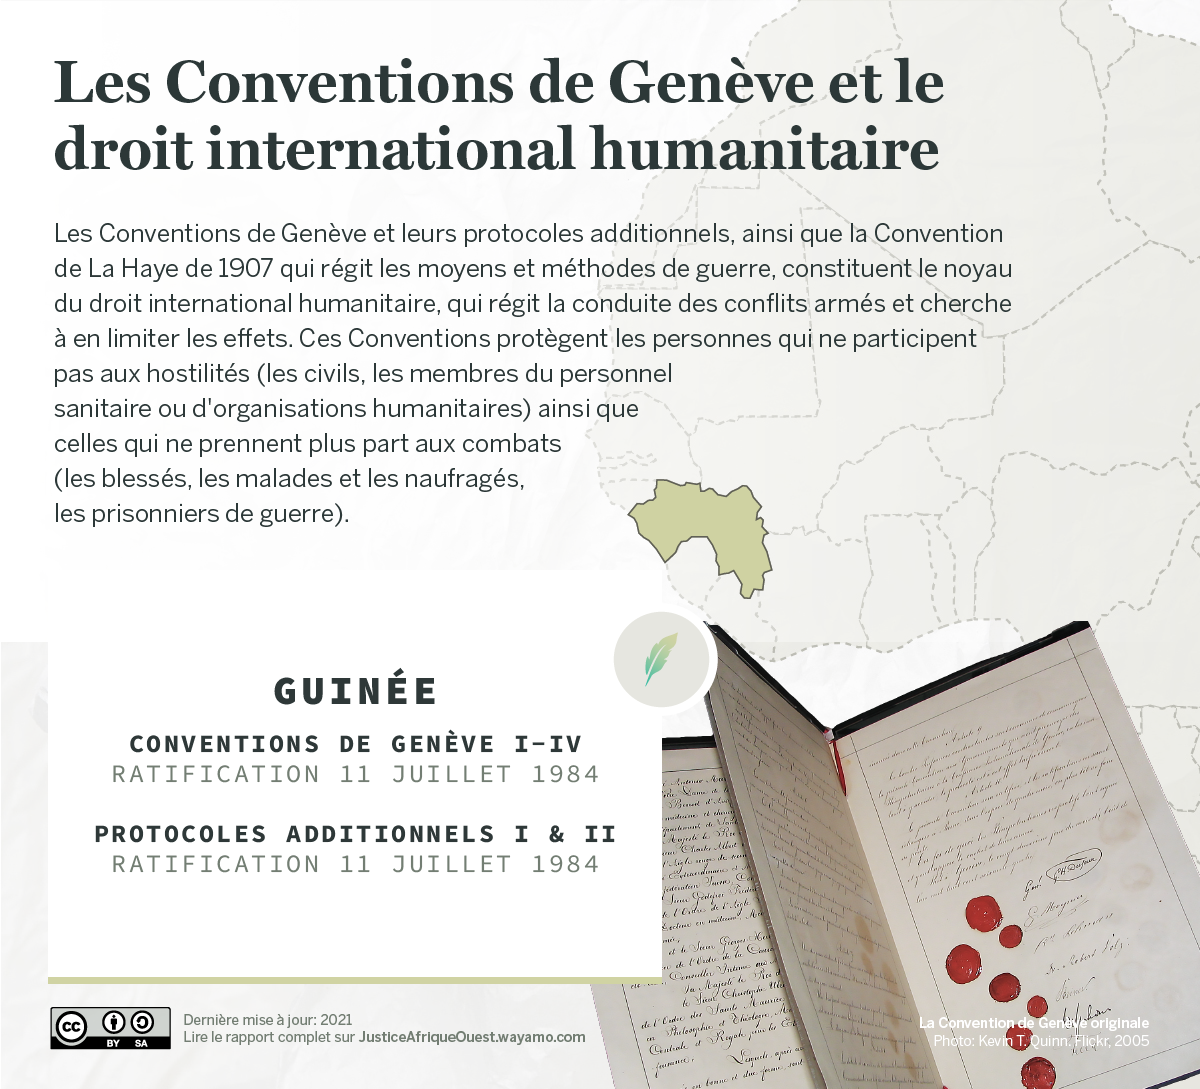 GUINEE_Conventions de Genève - Wayamo Foundation (CC BY-SA 4.0)